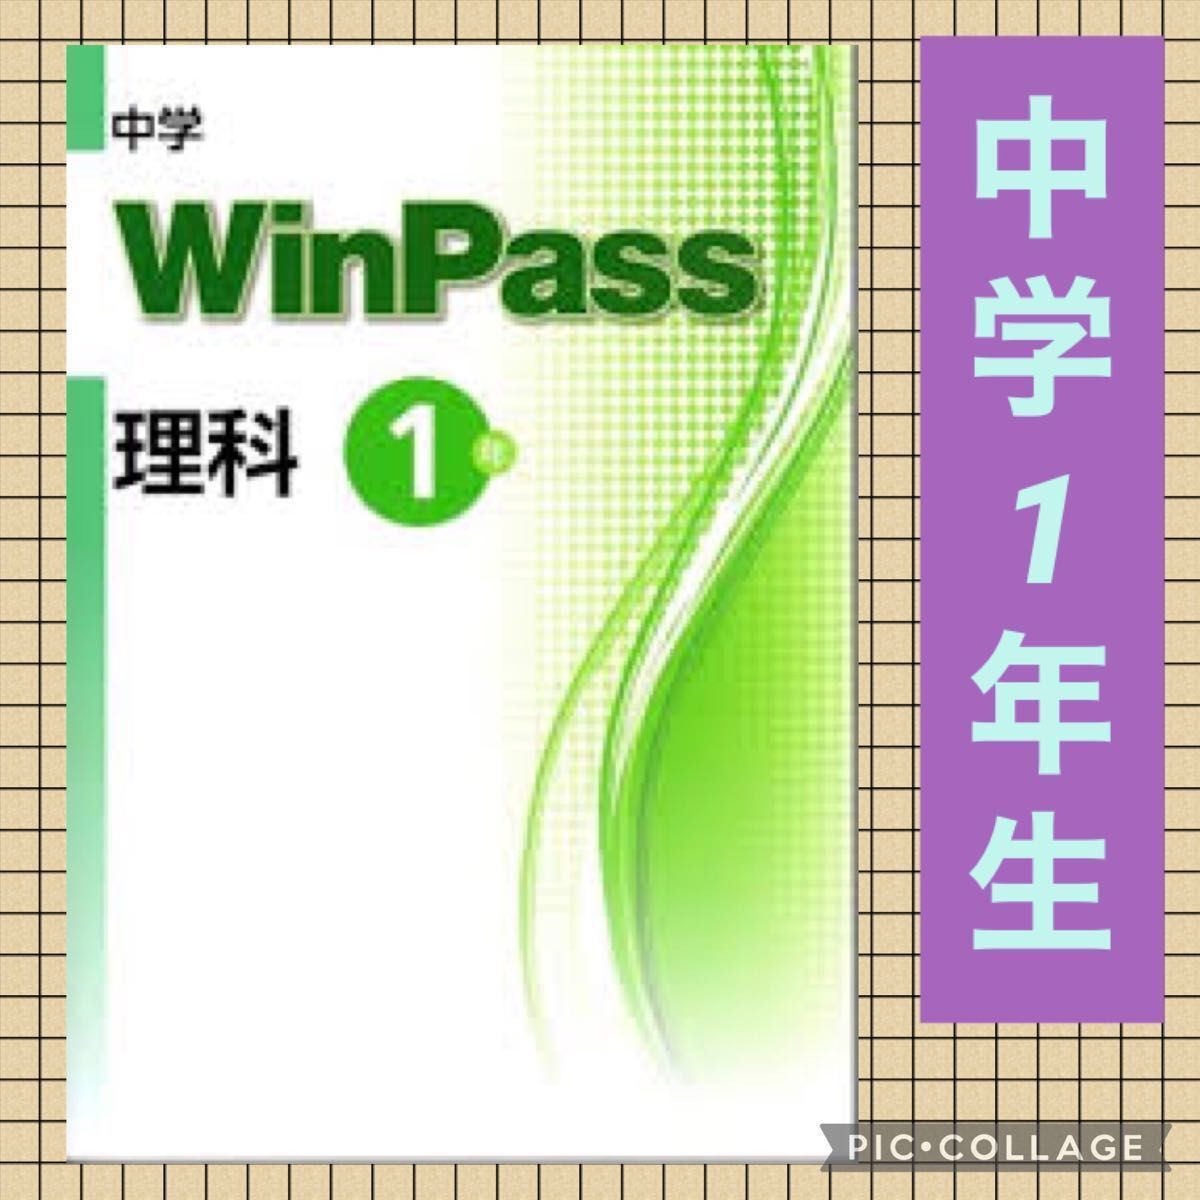 WinPass 理科 中学1年 winpass ウィンパス 中学 定期テスト 受験 中1 高校入試 高校受験 問題集 テキスト 